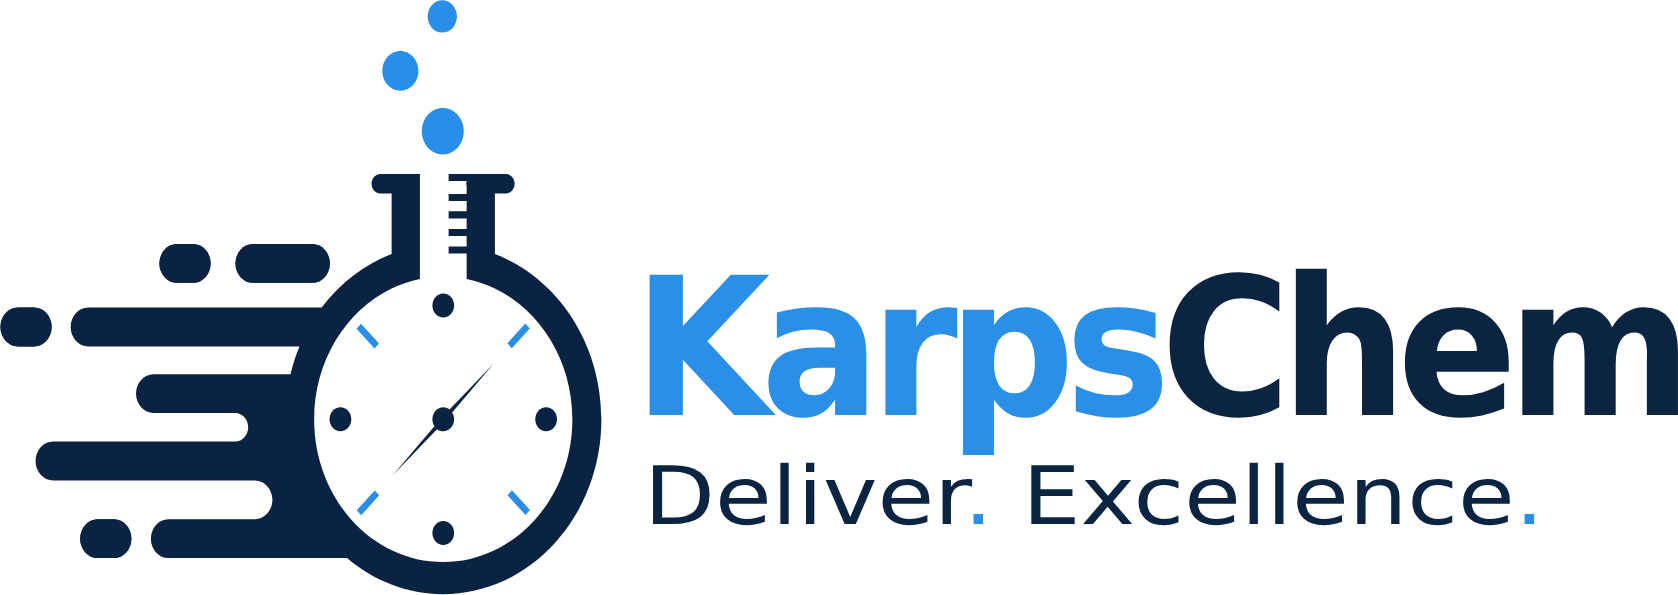 logo karpschem